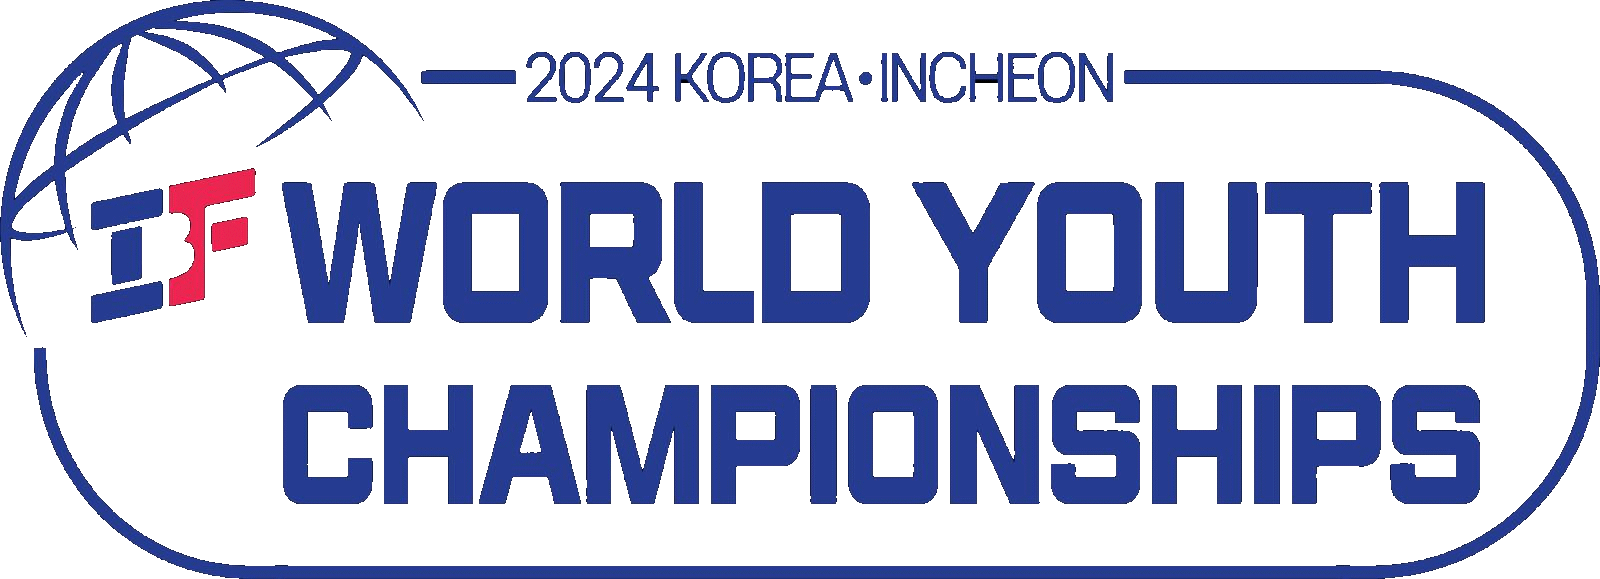 World Youth Cup Korea logo